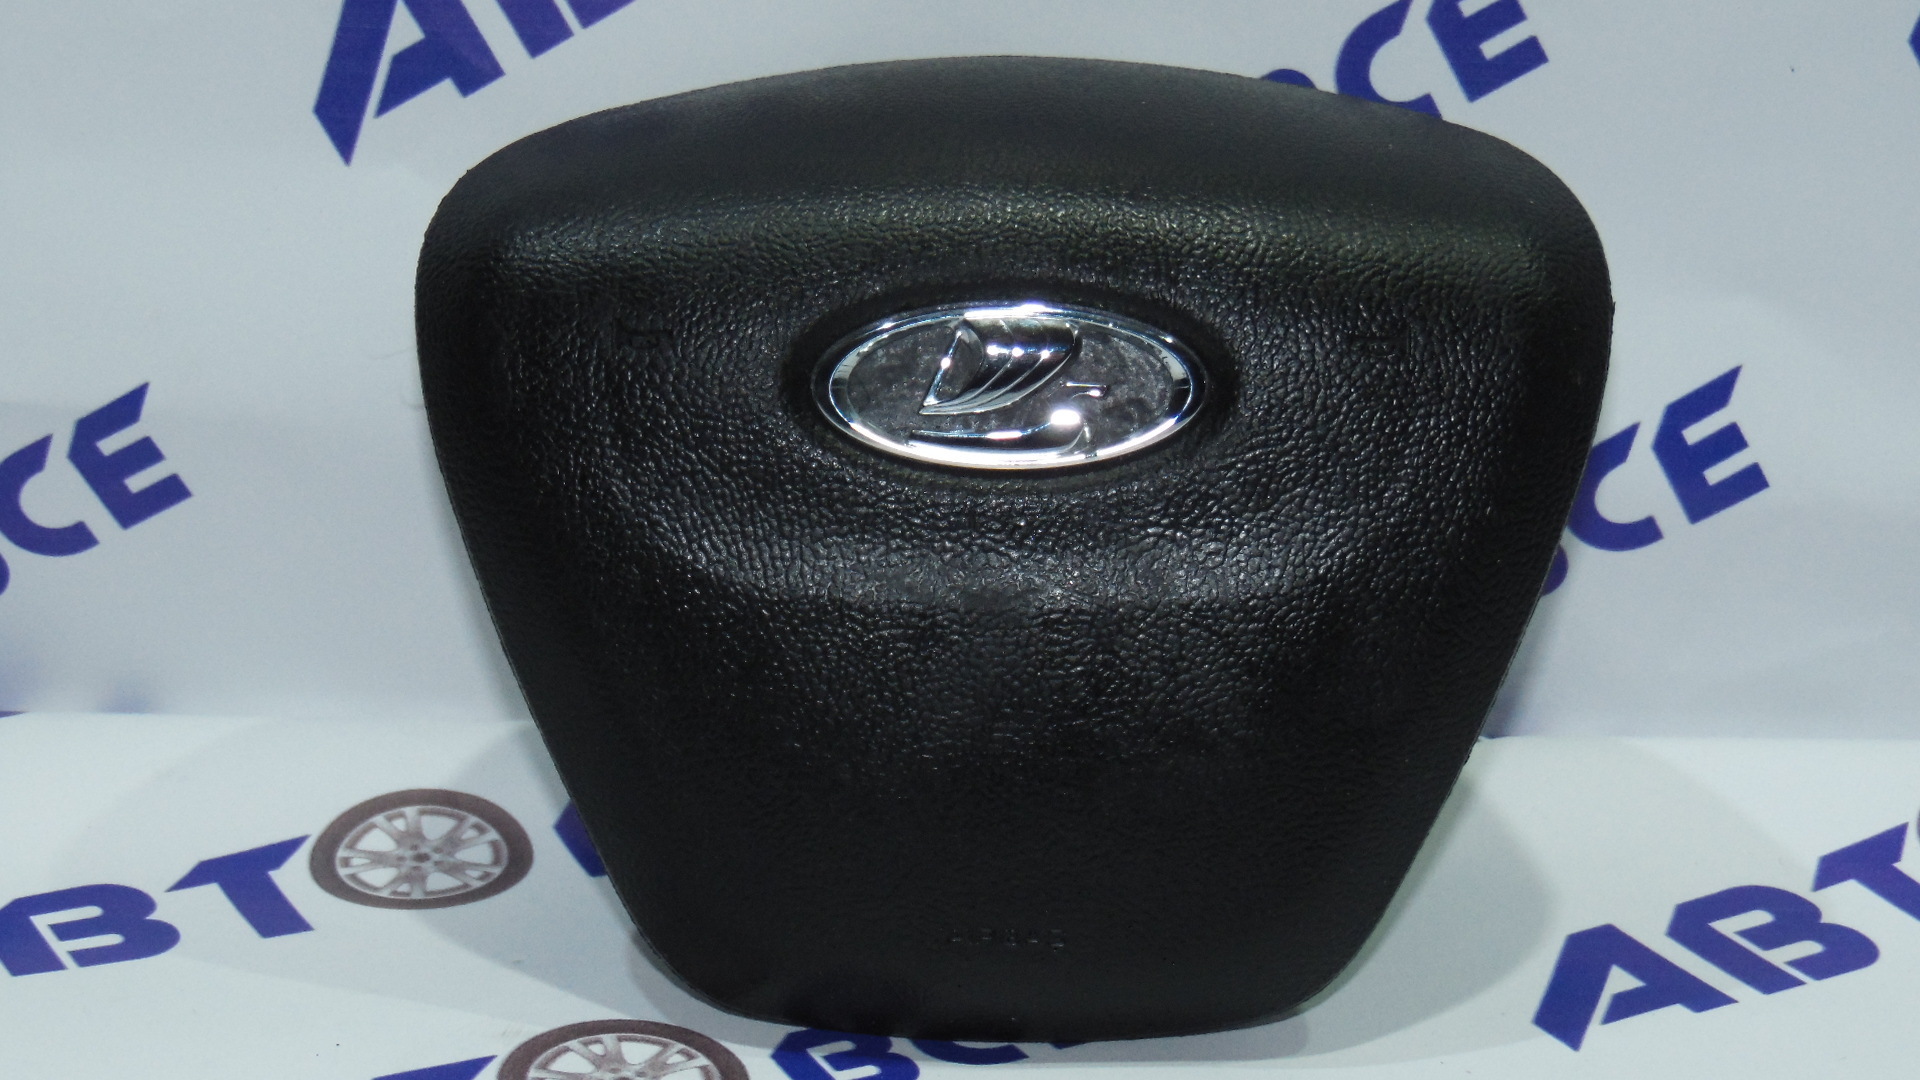 Крышка руля - кнопка сигнала - заглушка муляж Airbag (в руль)  Vesta Самара